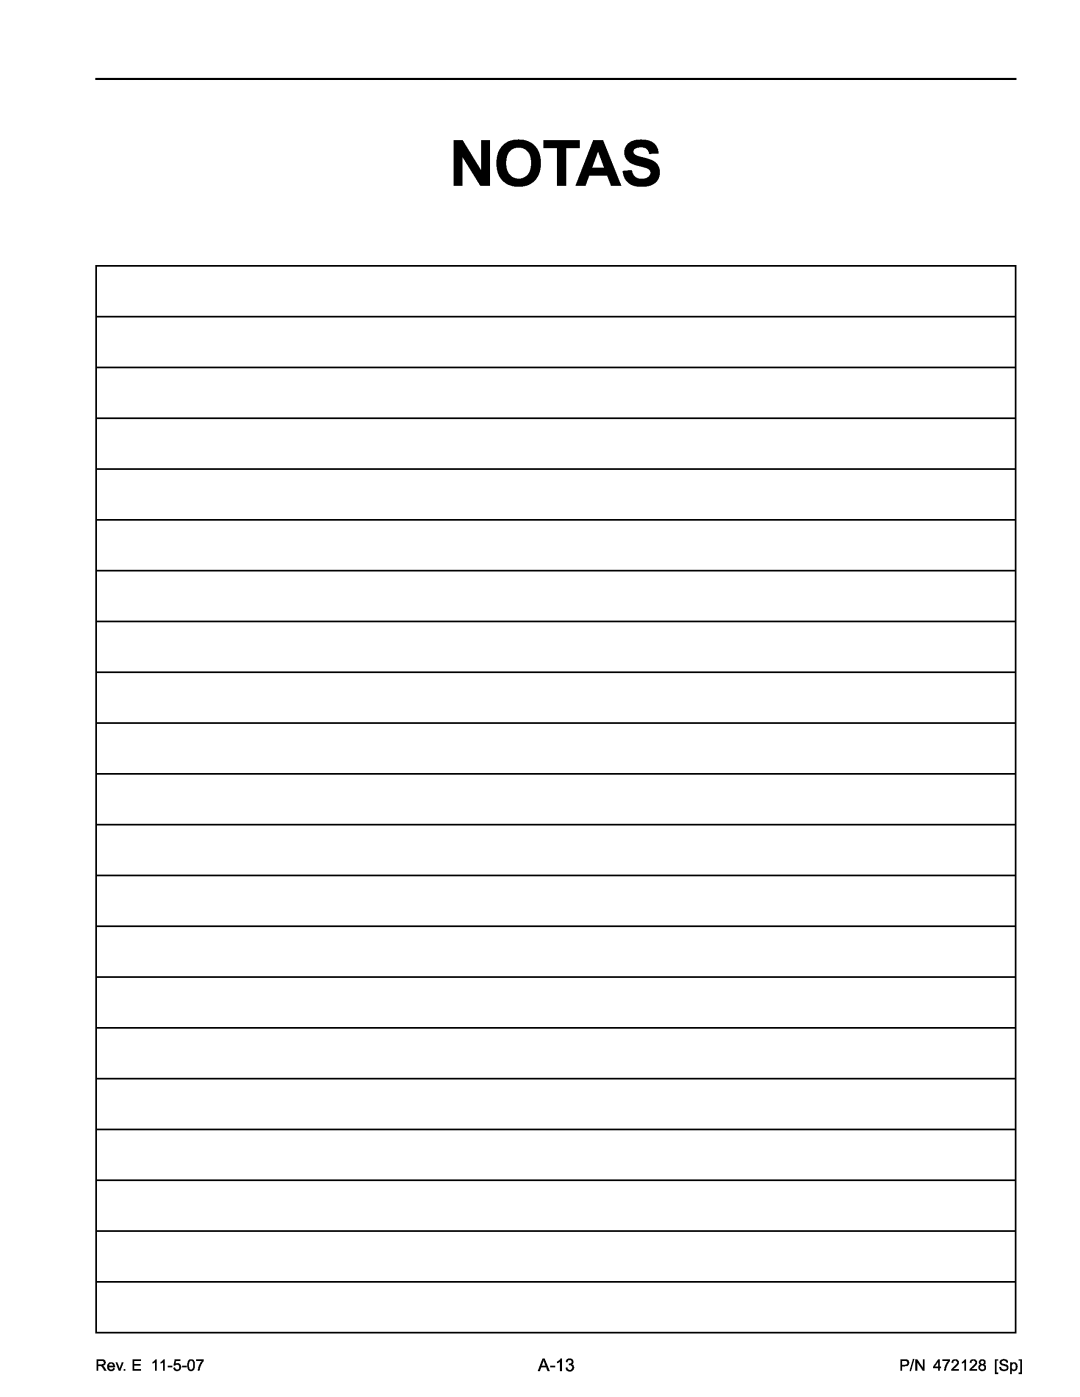 Pentair Hot Tub manual Notas, A-13, Rev. E, P/N 472128 Sp 